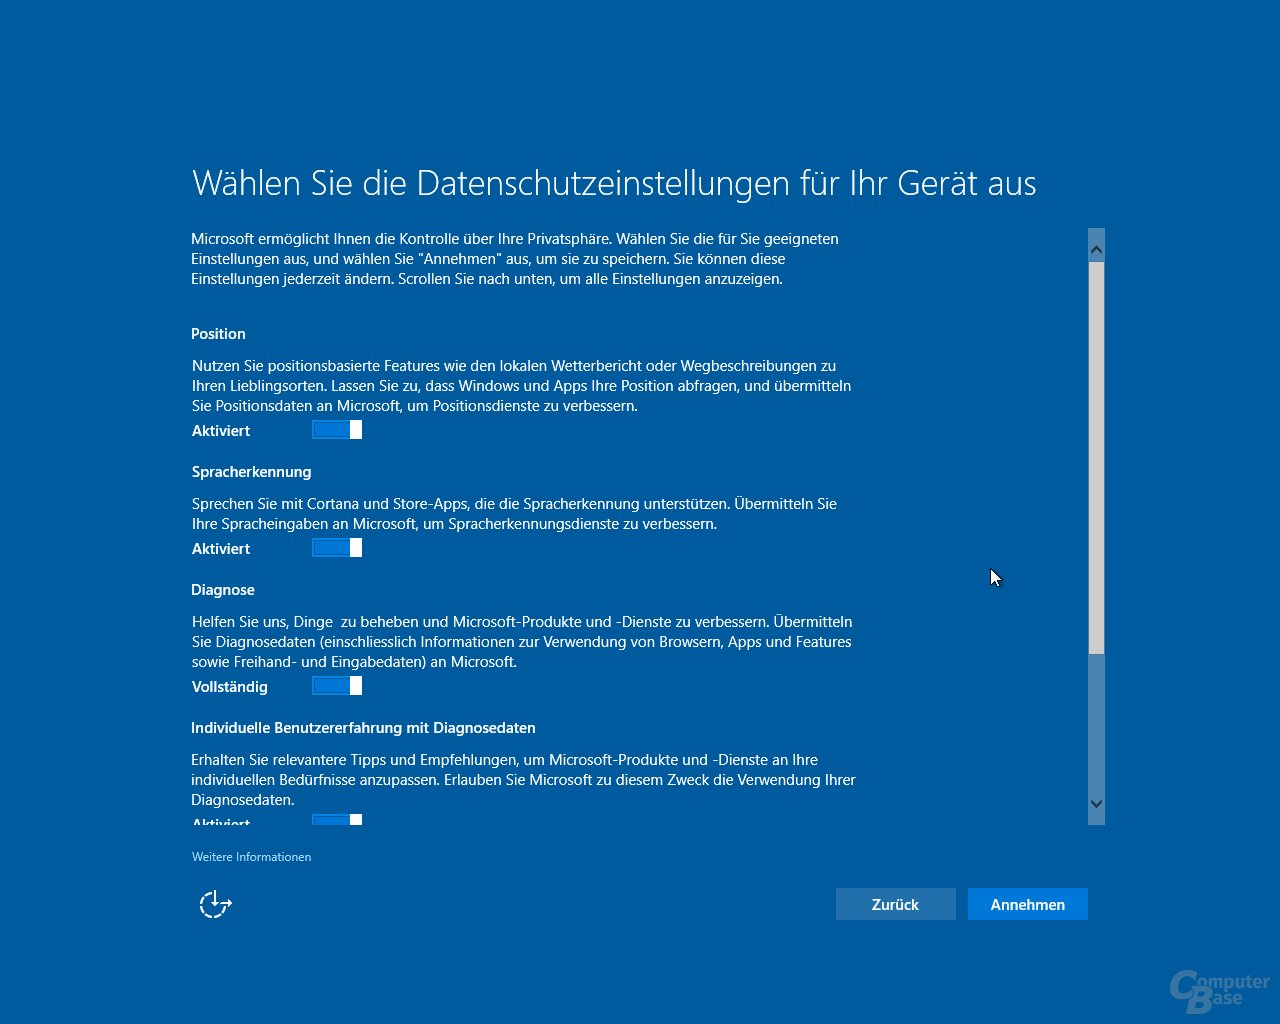 Windows 10 Creators Update: Datenschutz-Setup